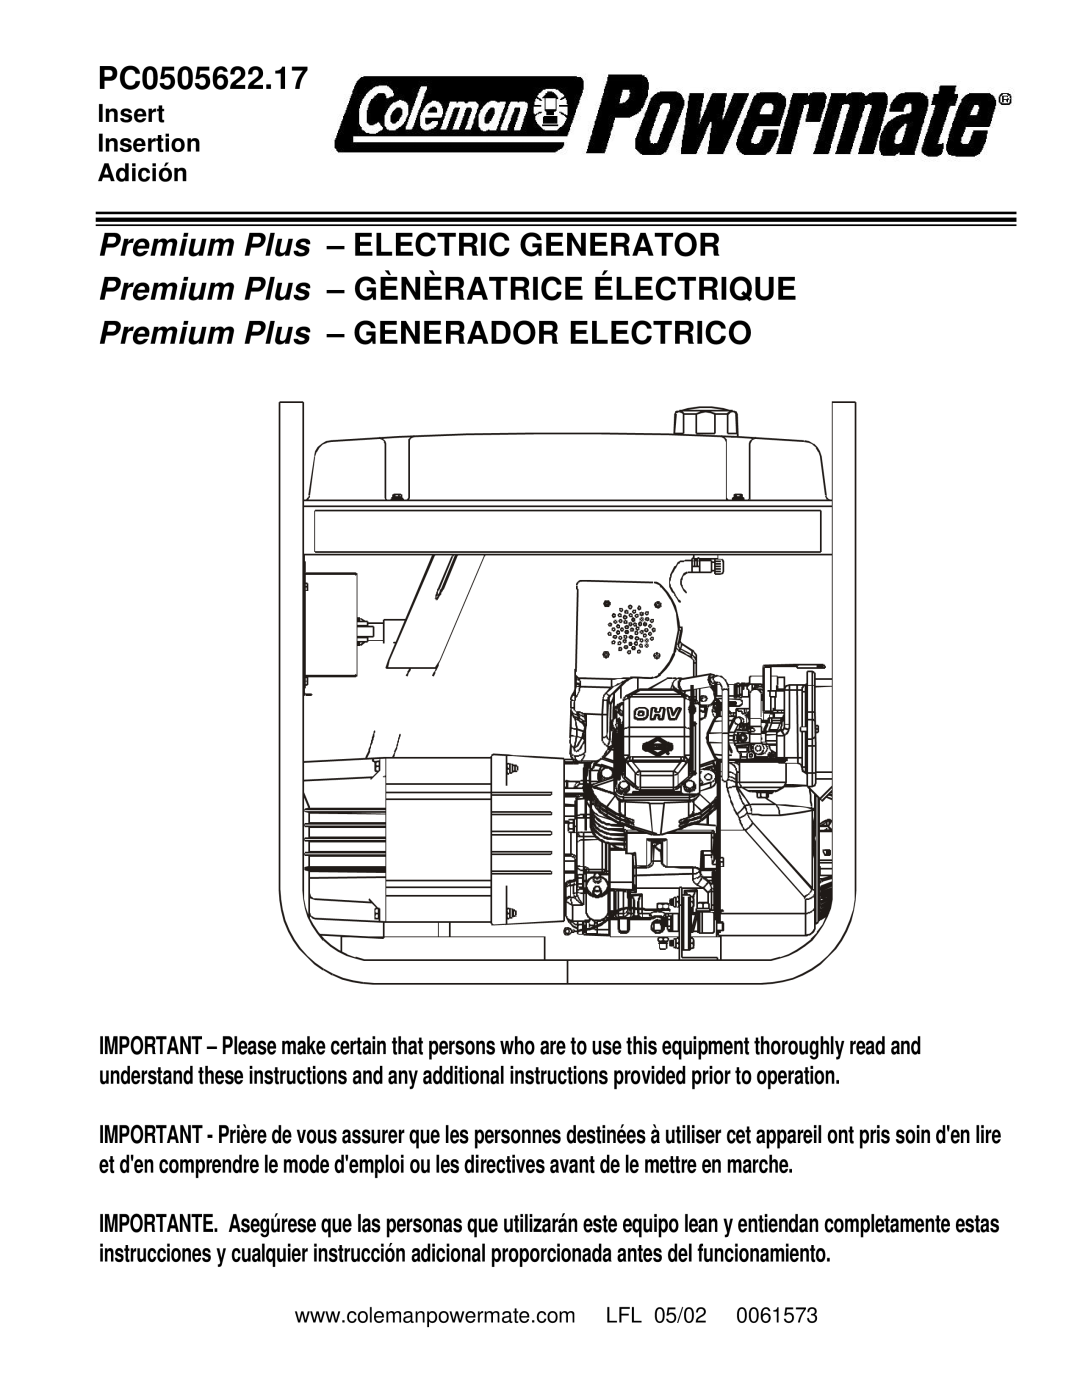 Powermate PC0505622.17 manual Premium Plus - ELECTRIC GENERATOR, Premium Plus - GÈNÈRATRICE ÉLECTRIQUE 